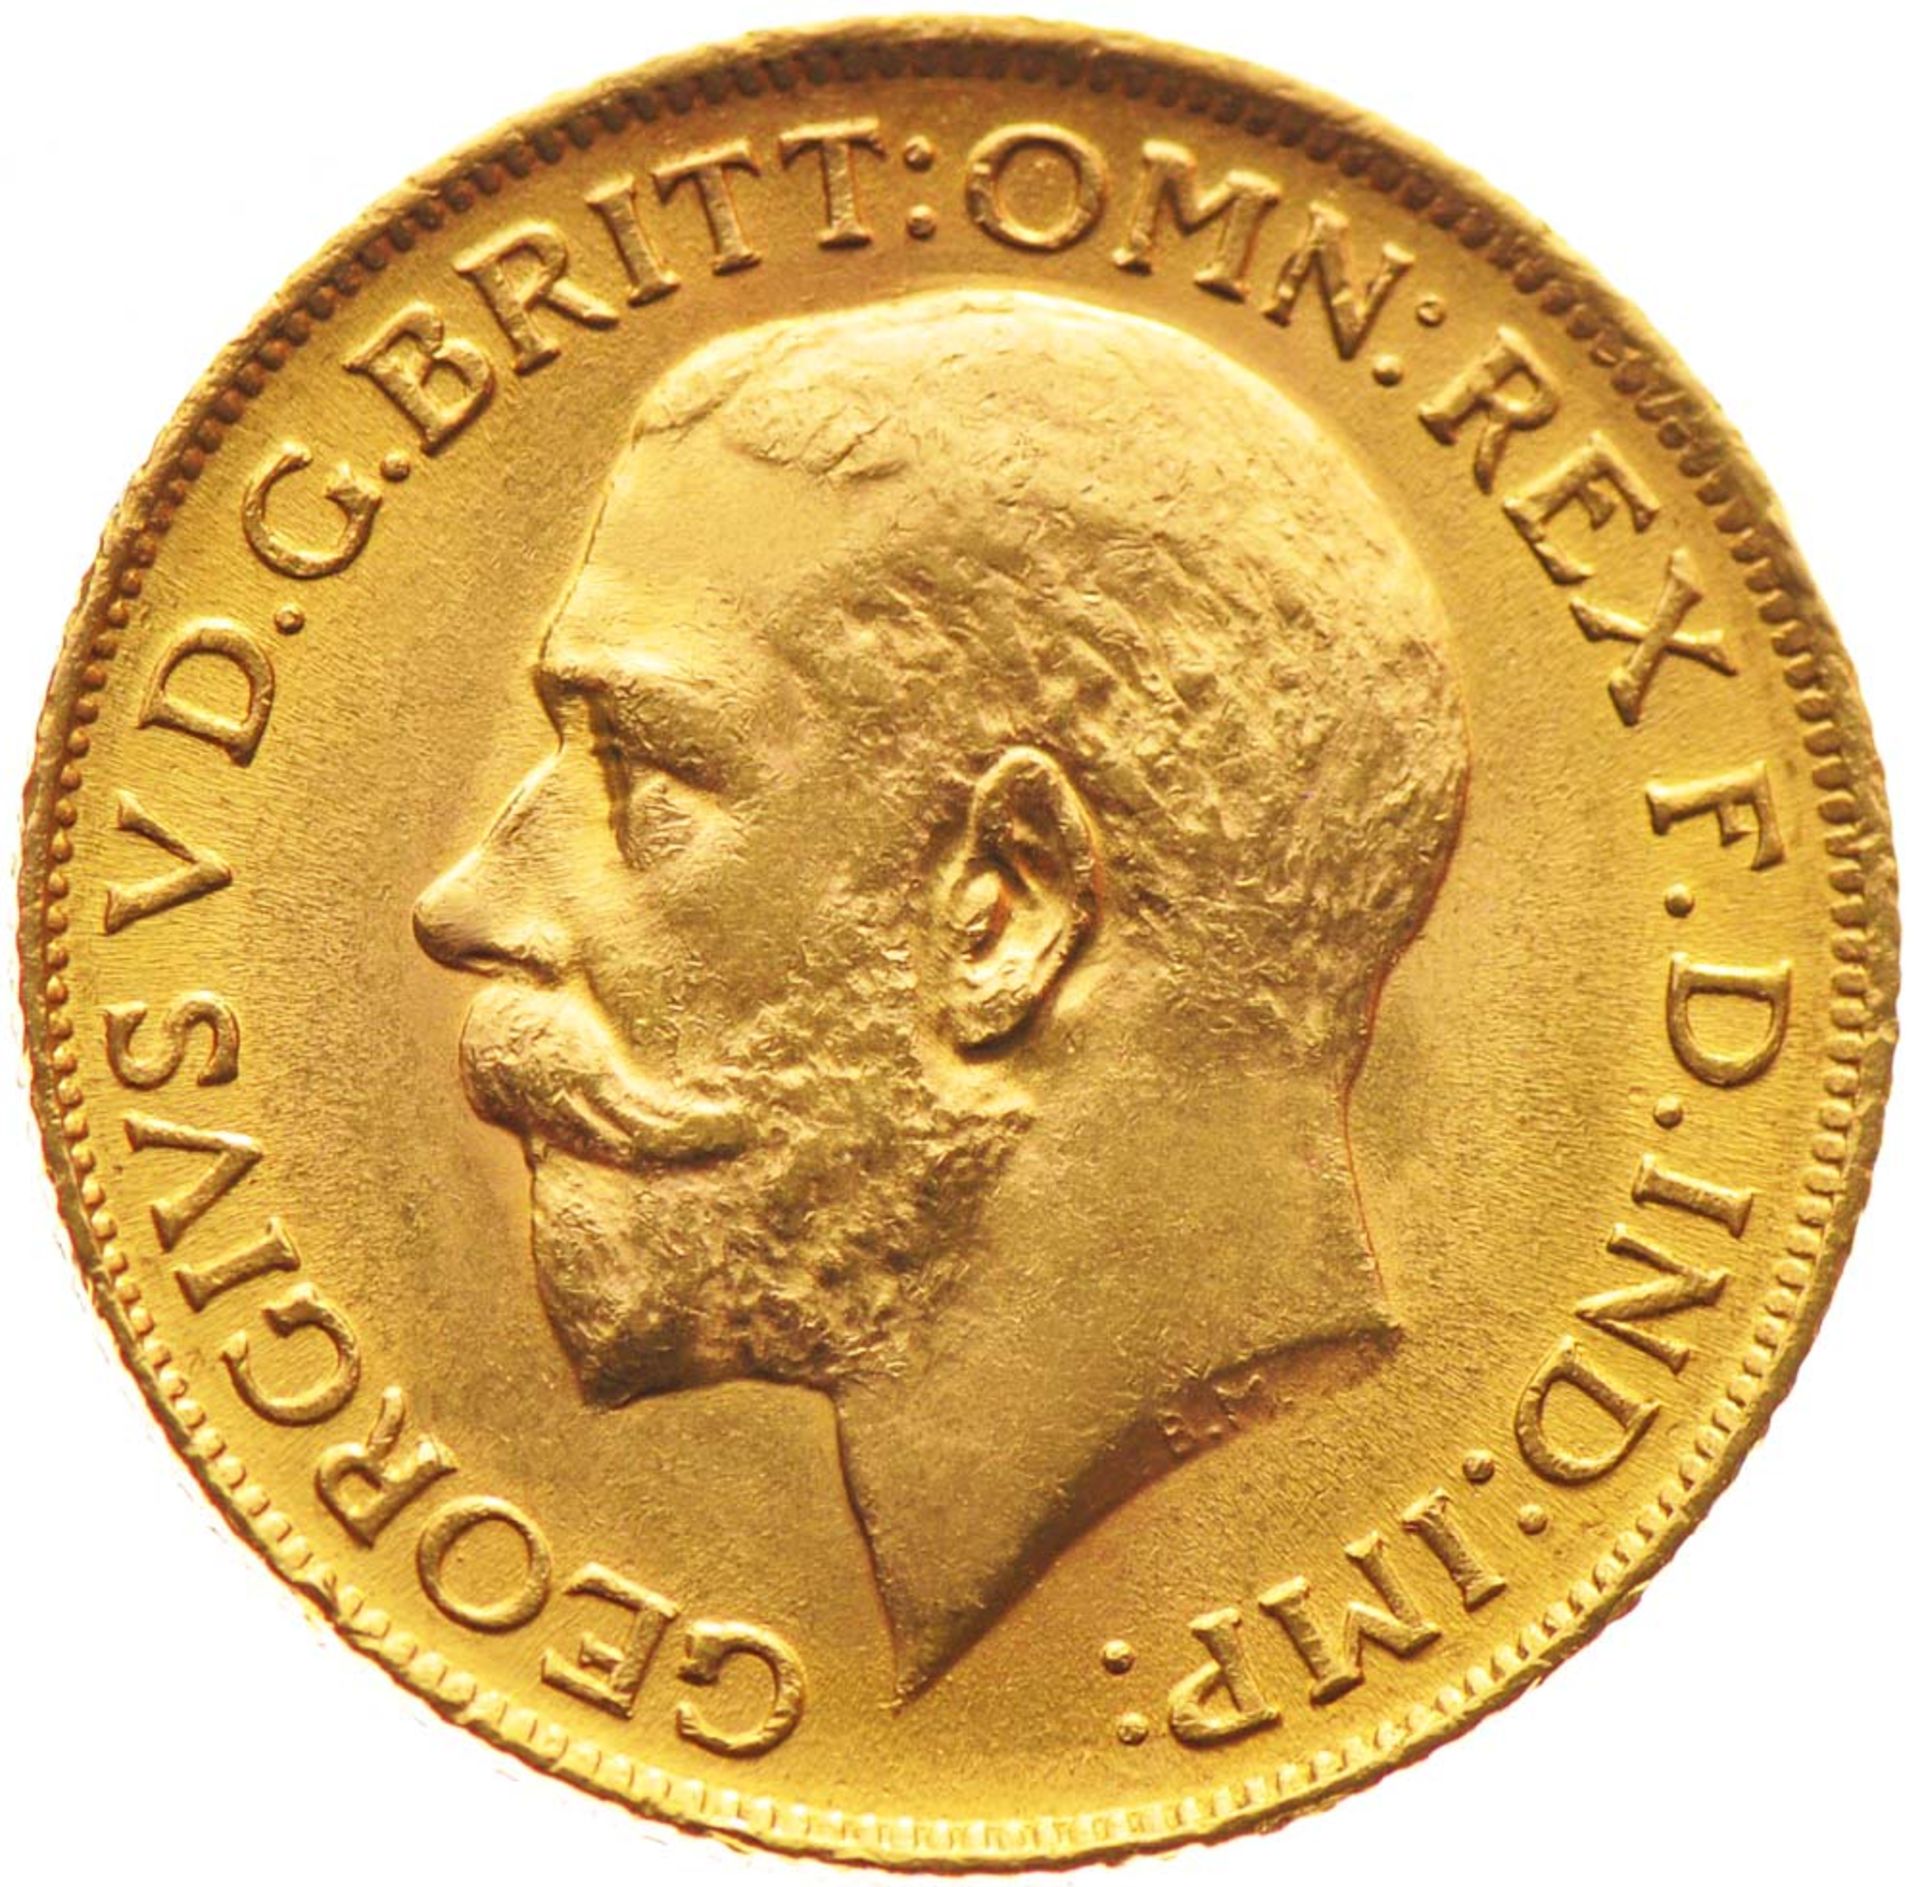 1912 - Gold Half Sovereign - King George V, London - F - Image 2 of 2